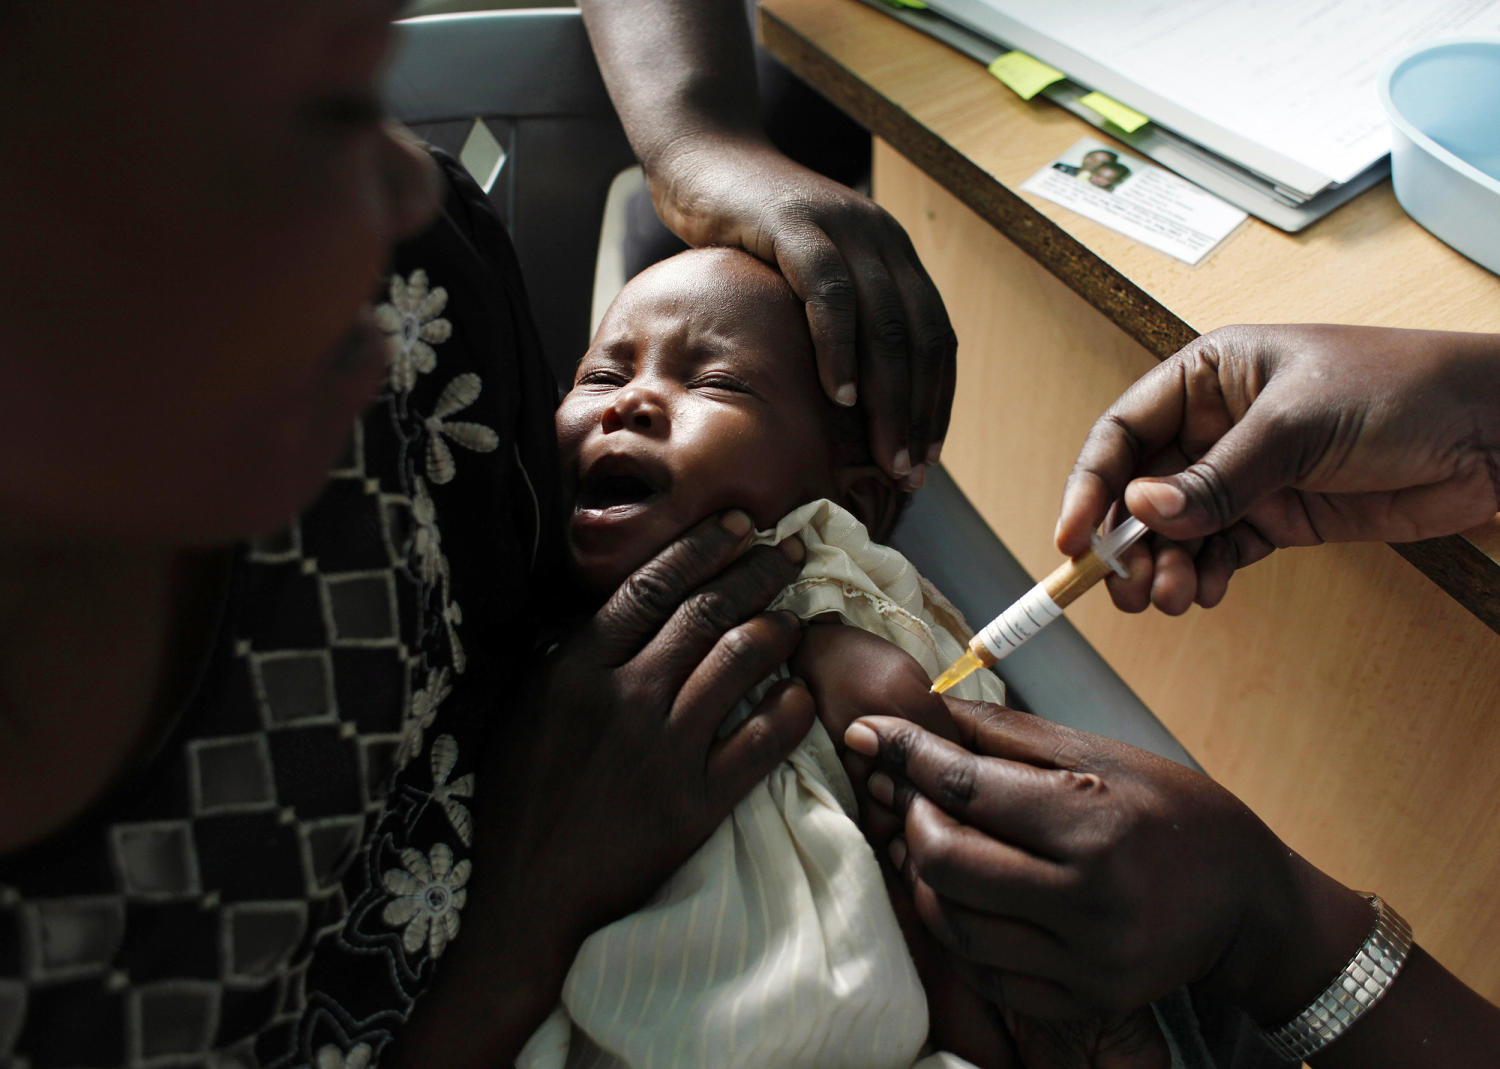 World’s first malaria vaccine program for children starts in Cameroon